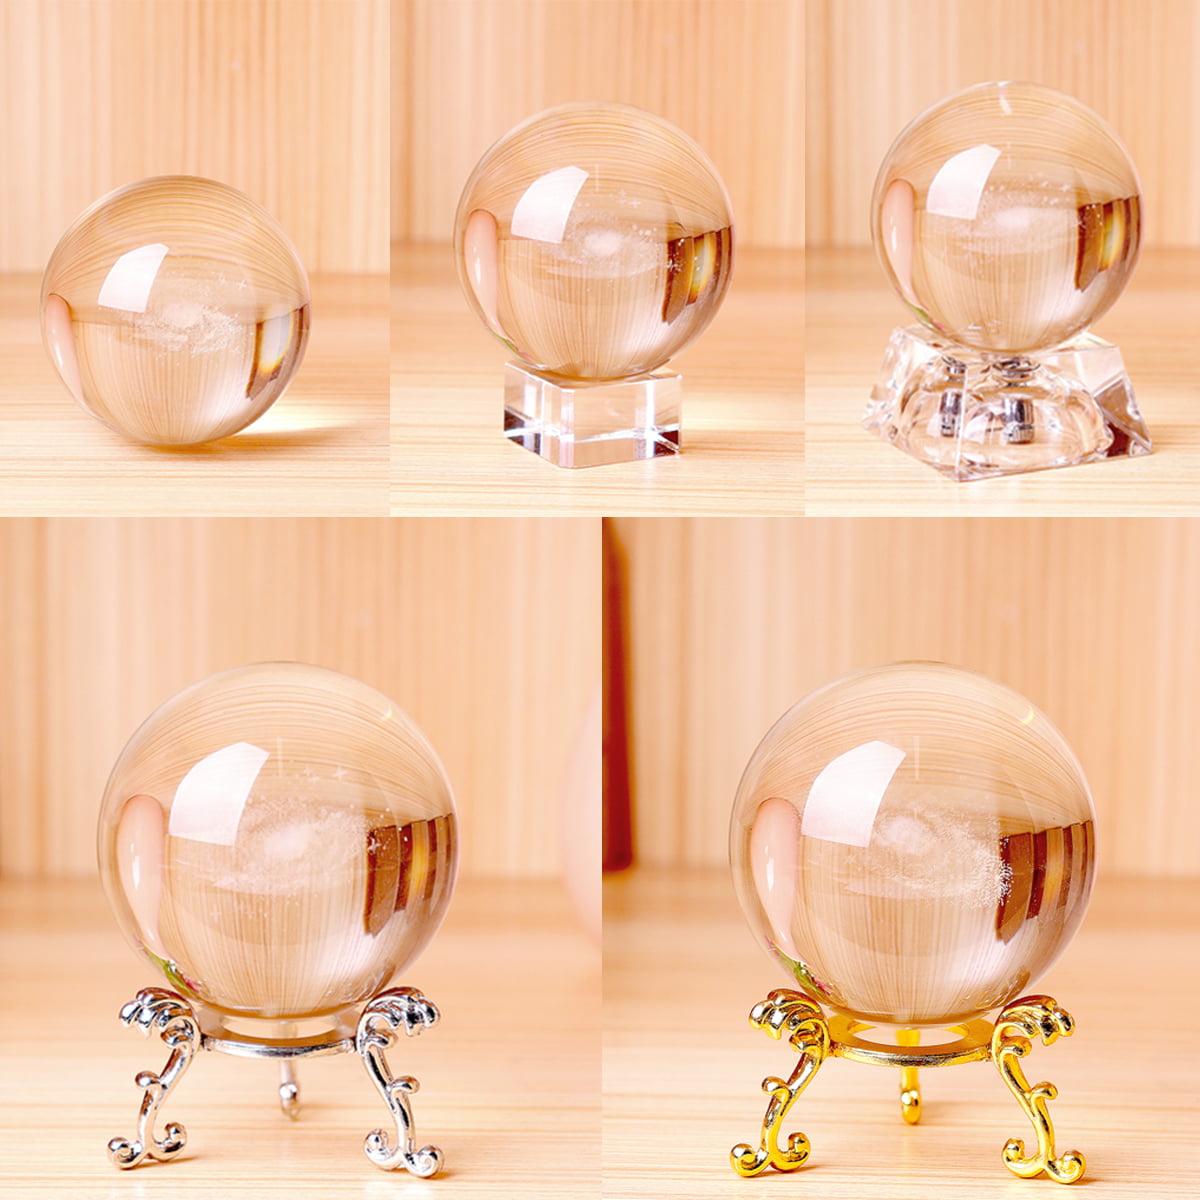 60mm 3D Galaxy Crystal Ball Sphere Ornament Globe Glass Home Decor Gift 